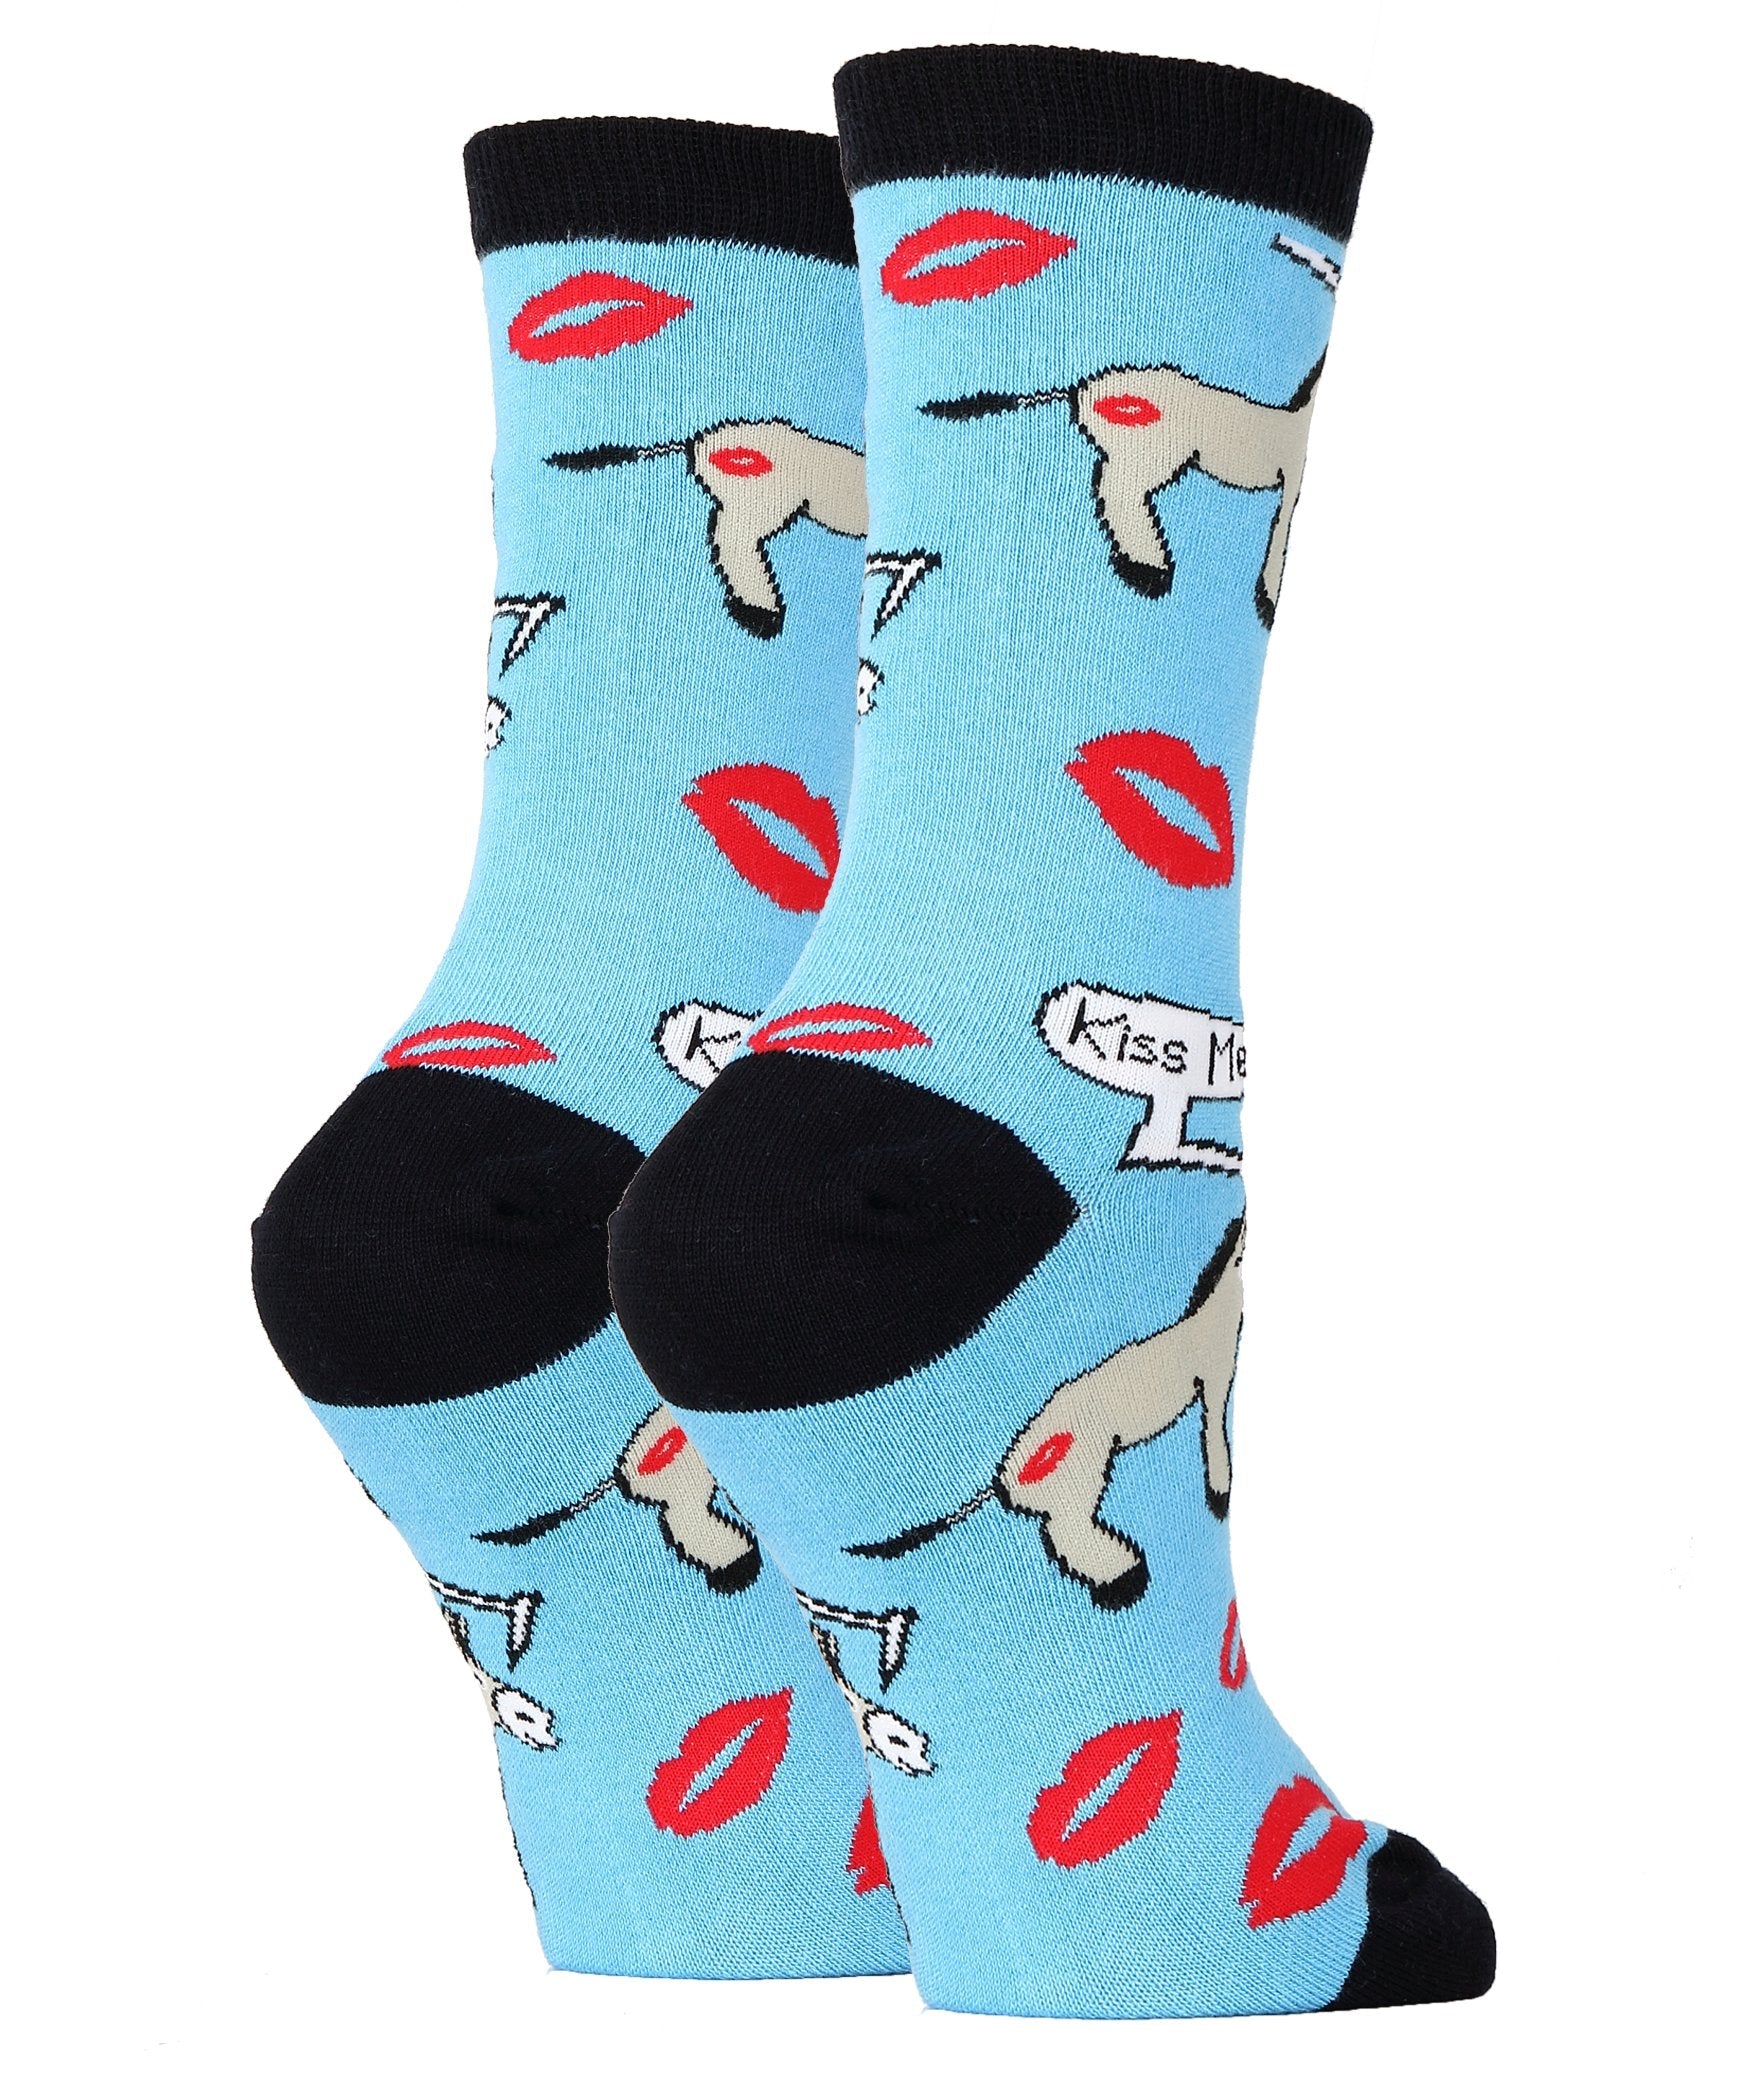 kiss-my-ass-womens-crew-socks-3-oooh-yeah-socks